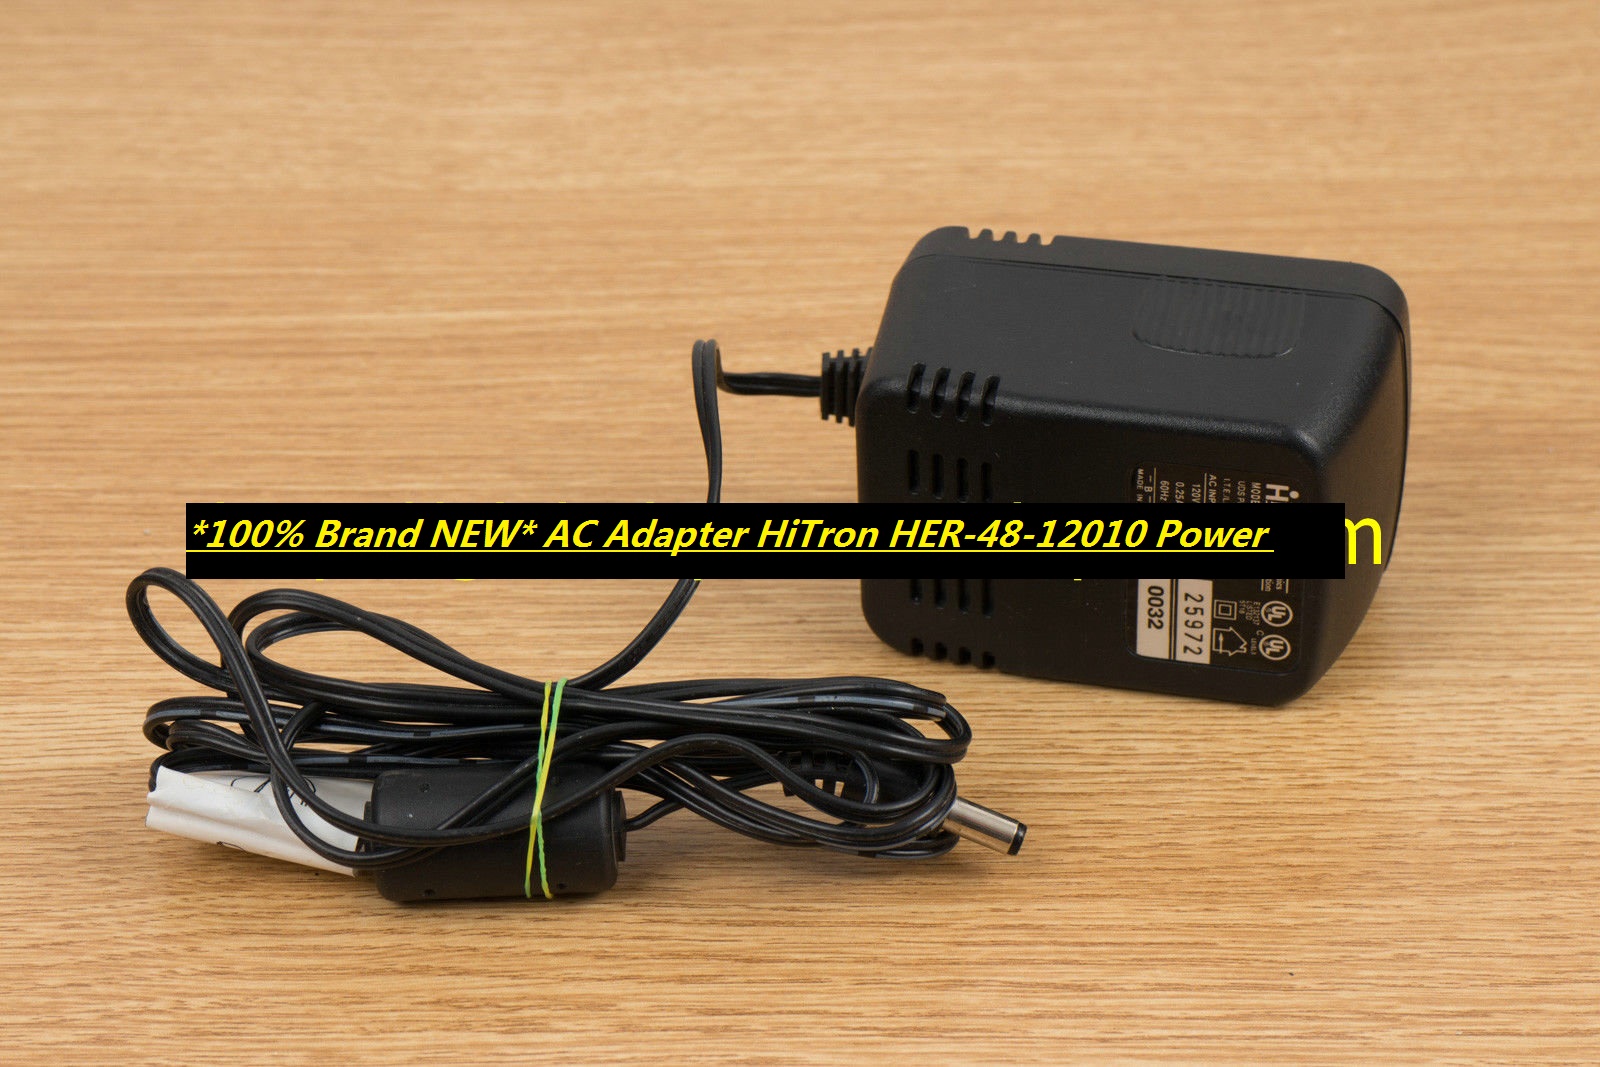 *100% Brand NEW* AC Adapter HiTron HER-48-12010 Power Supply